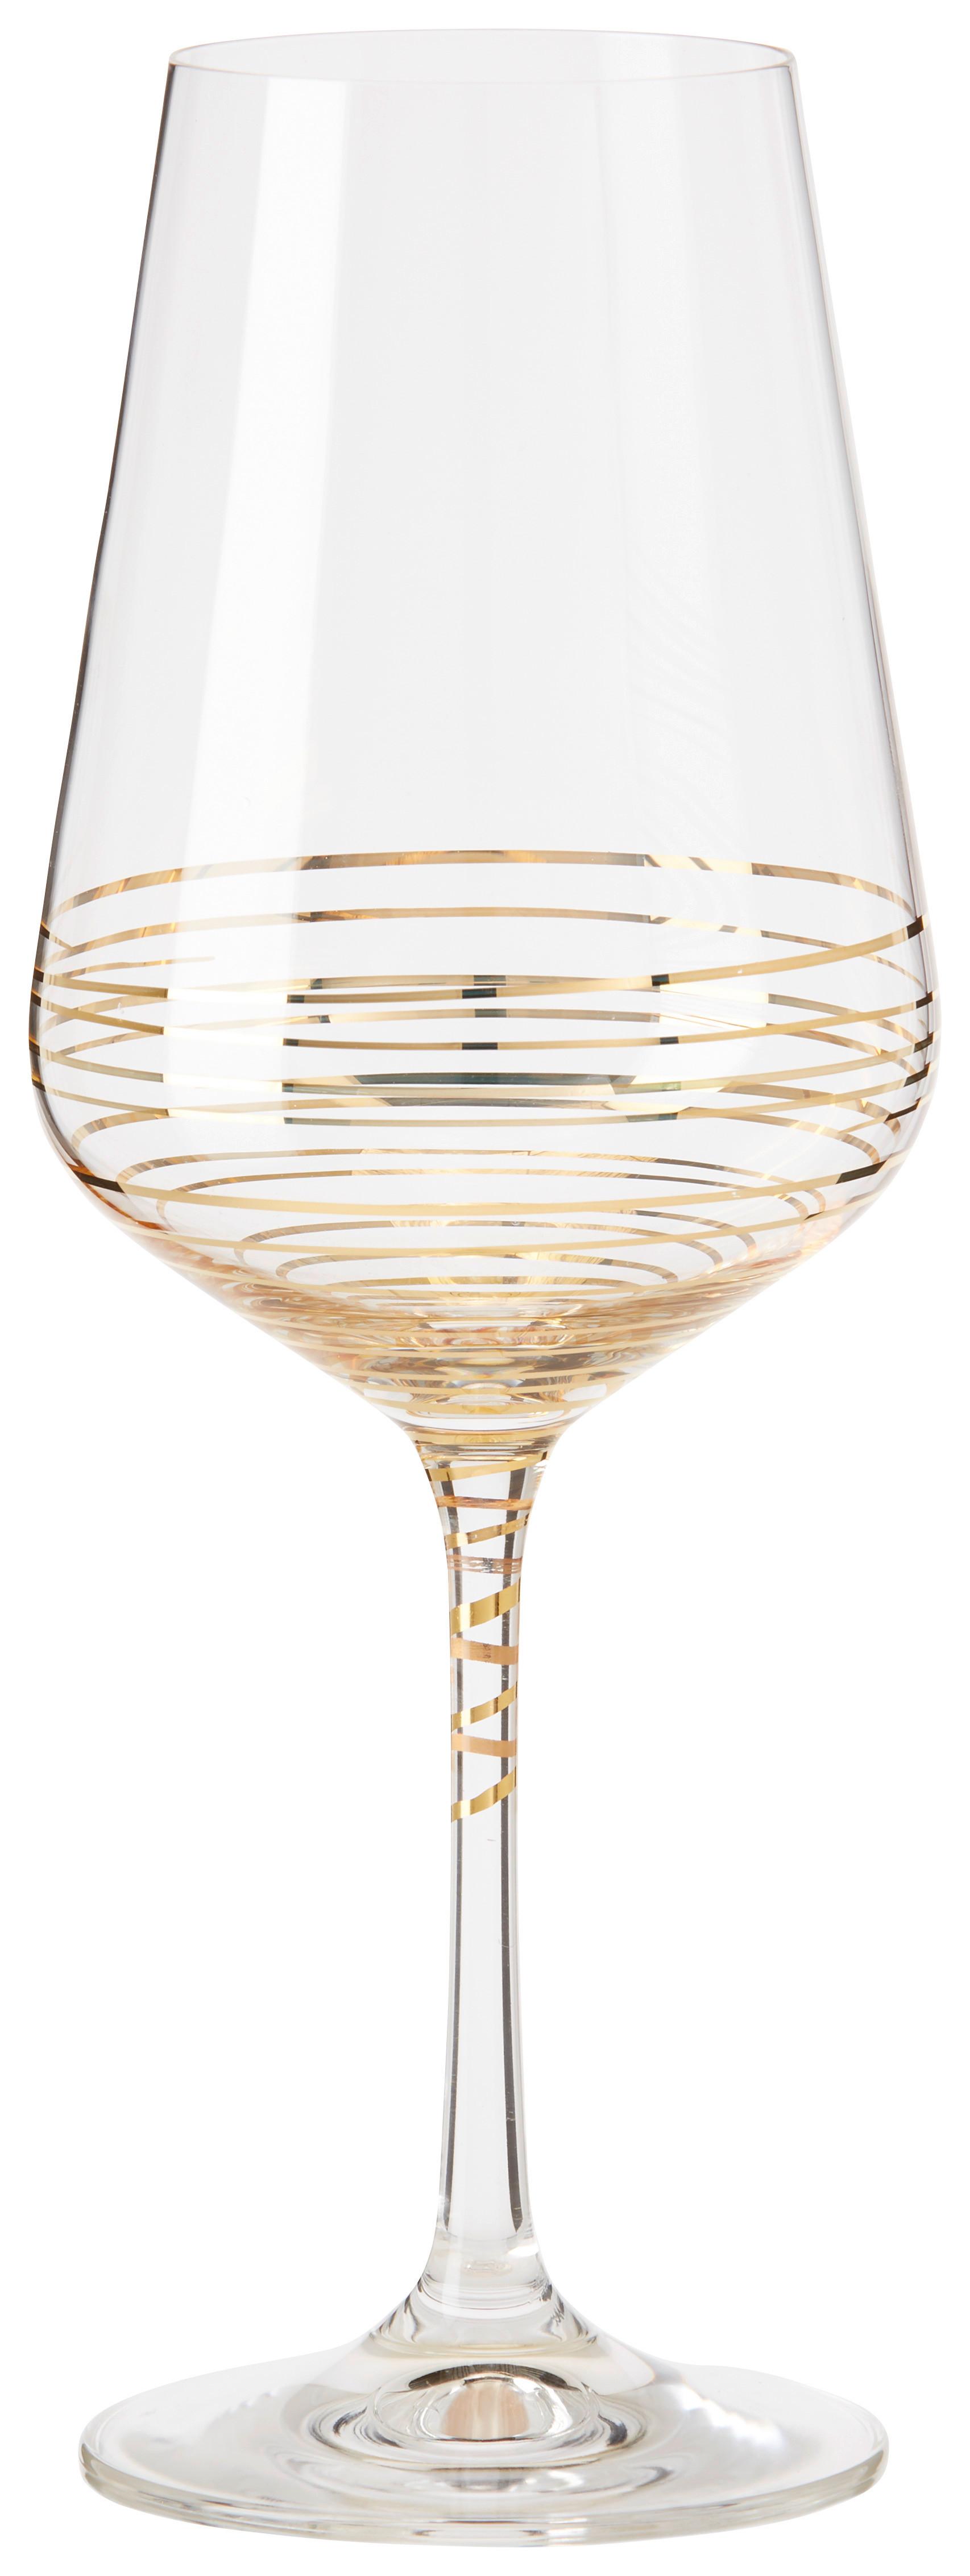 Prosperveil 500 ml Edelstahl Weingläser Rotweinkelch Champagnergläser Trink 